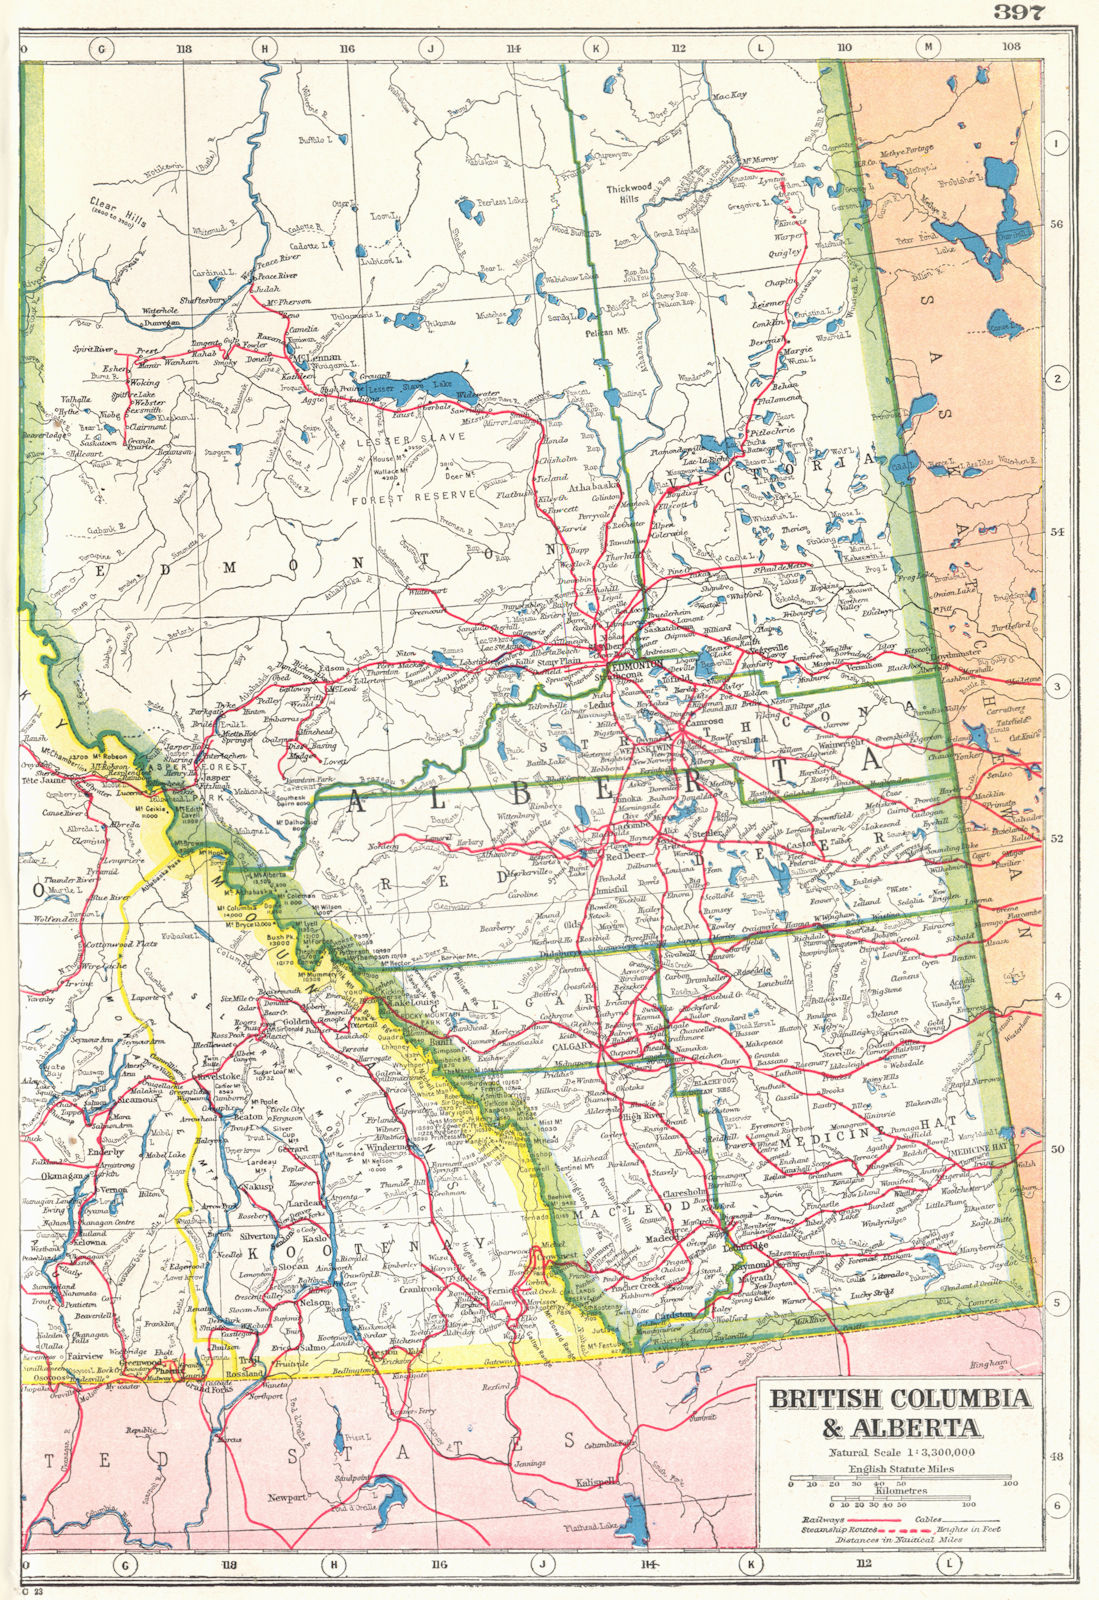 ALBERTA. Showing railways & part of British Columbia. Canada 1920 old map